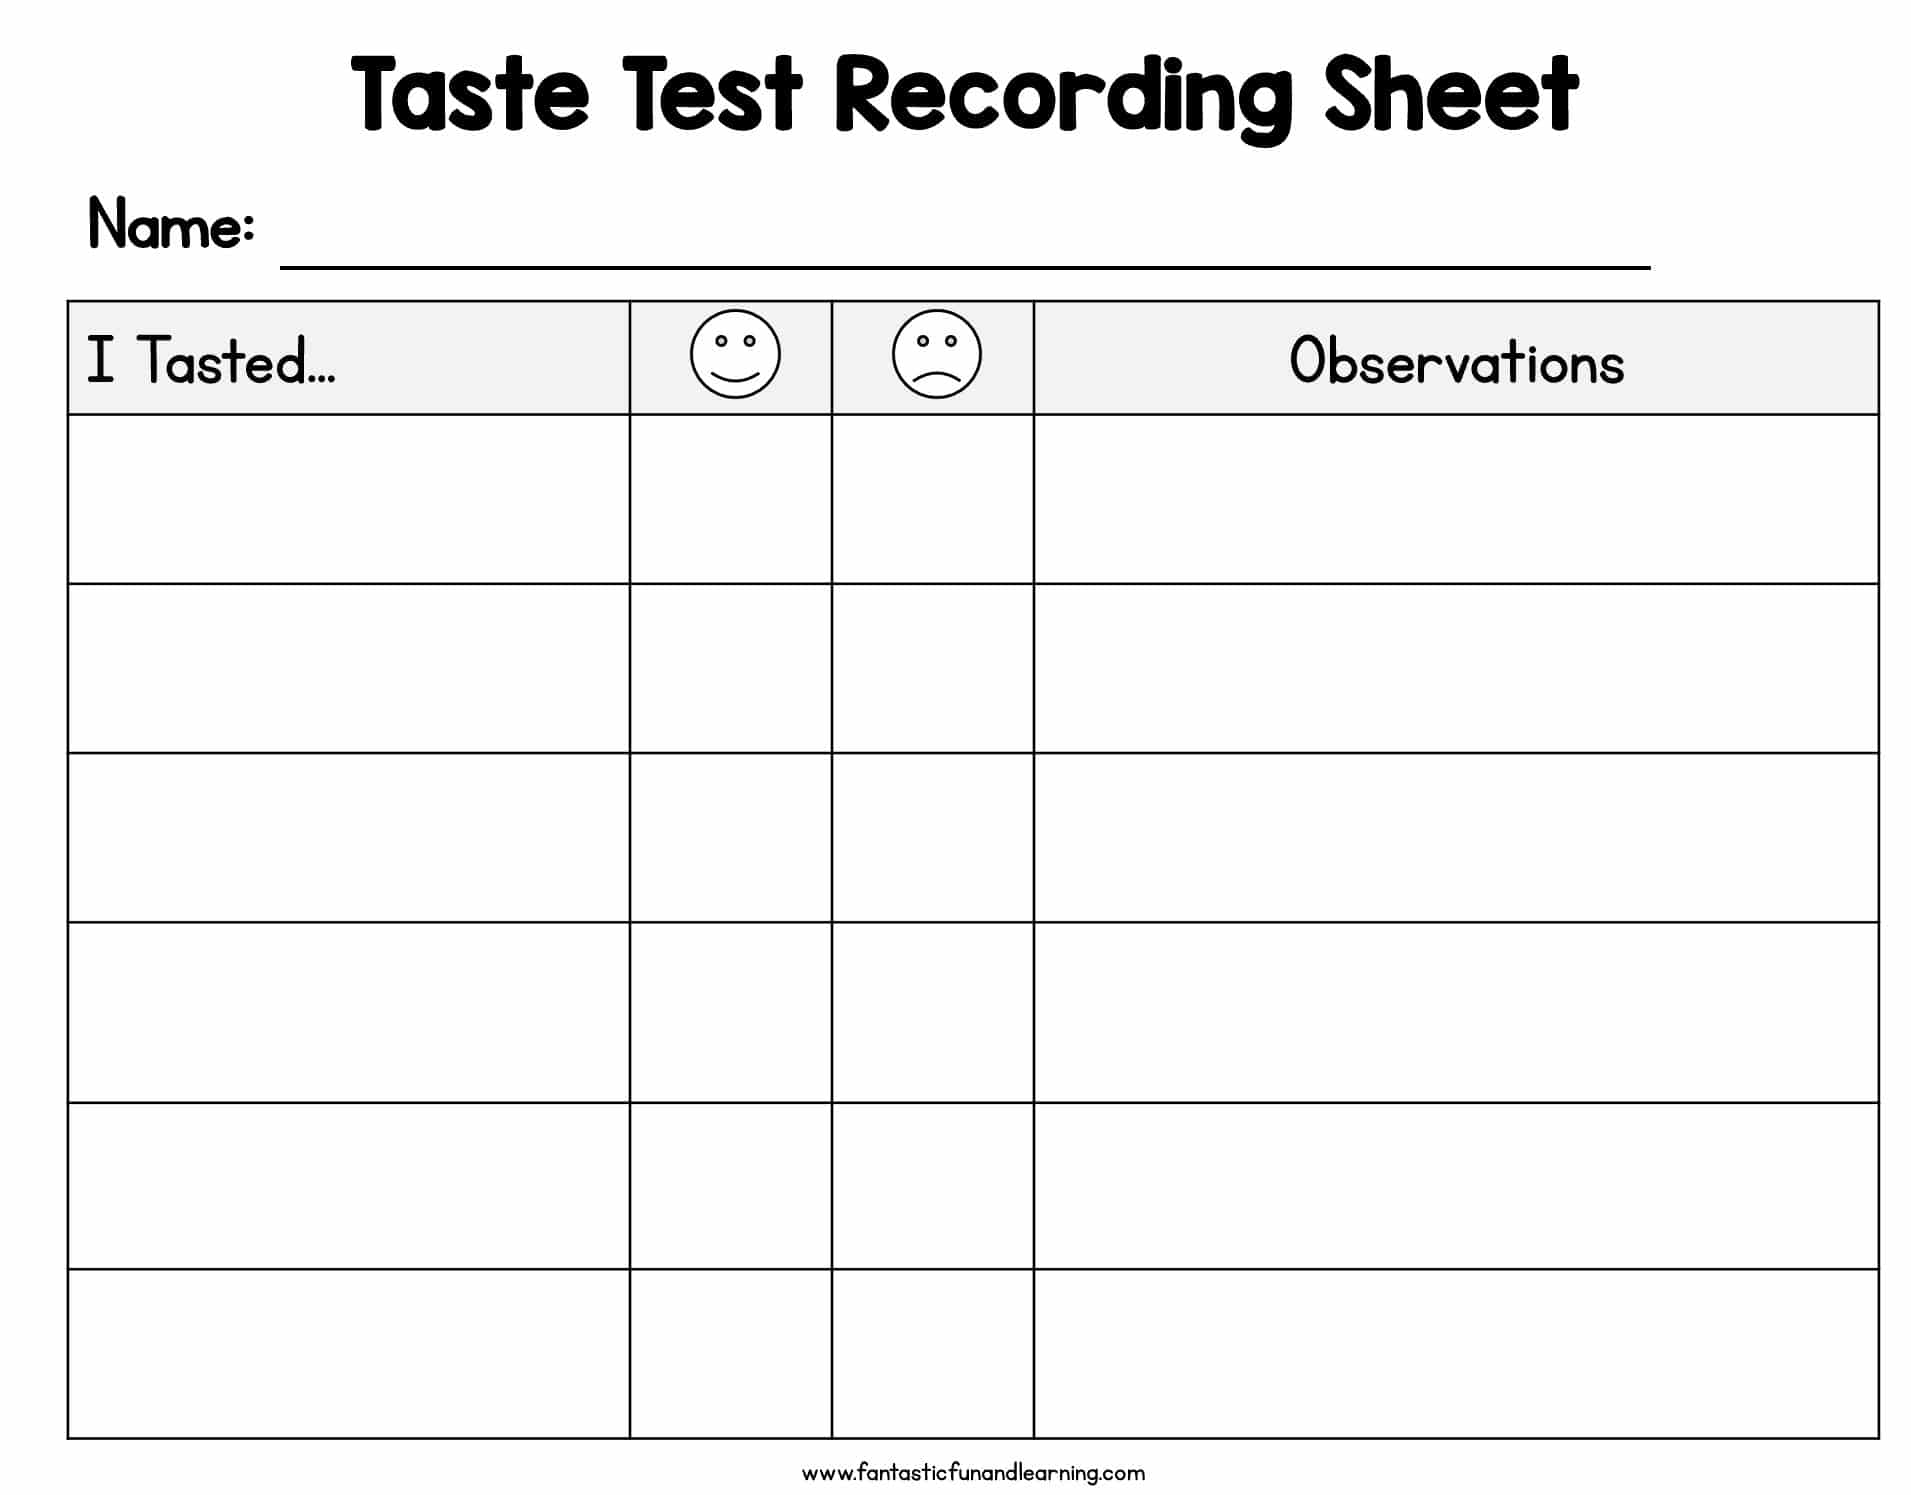 Taste Test Recording Sheet Preview